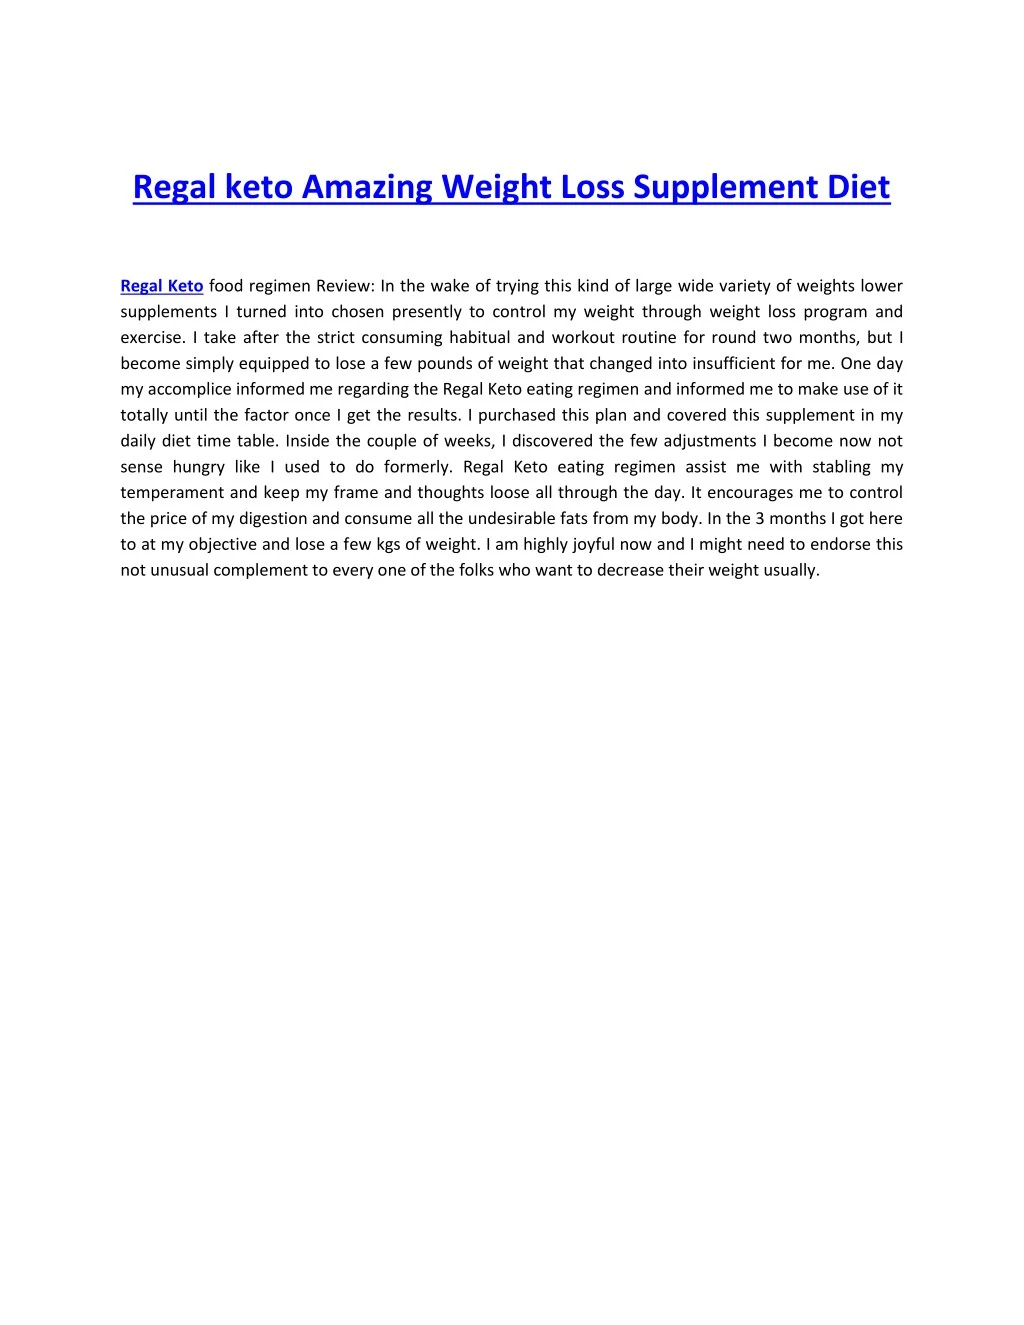 regal keto amazing weight loss supplement diet